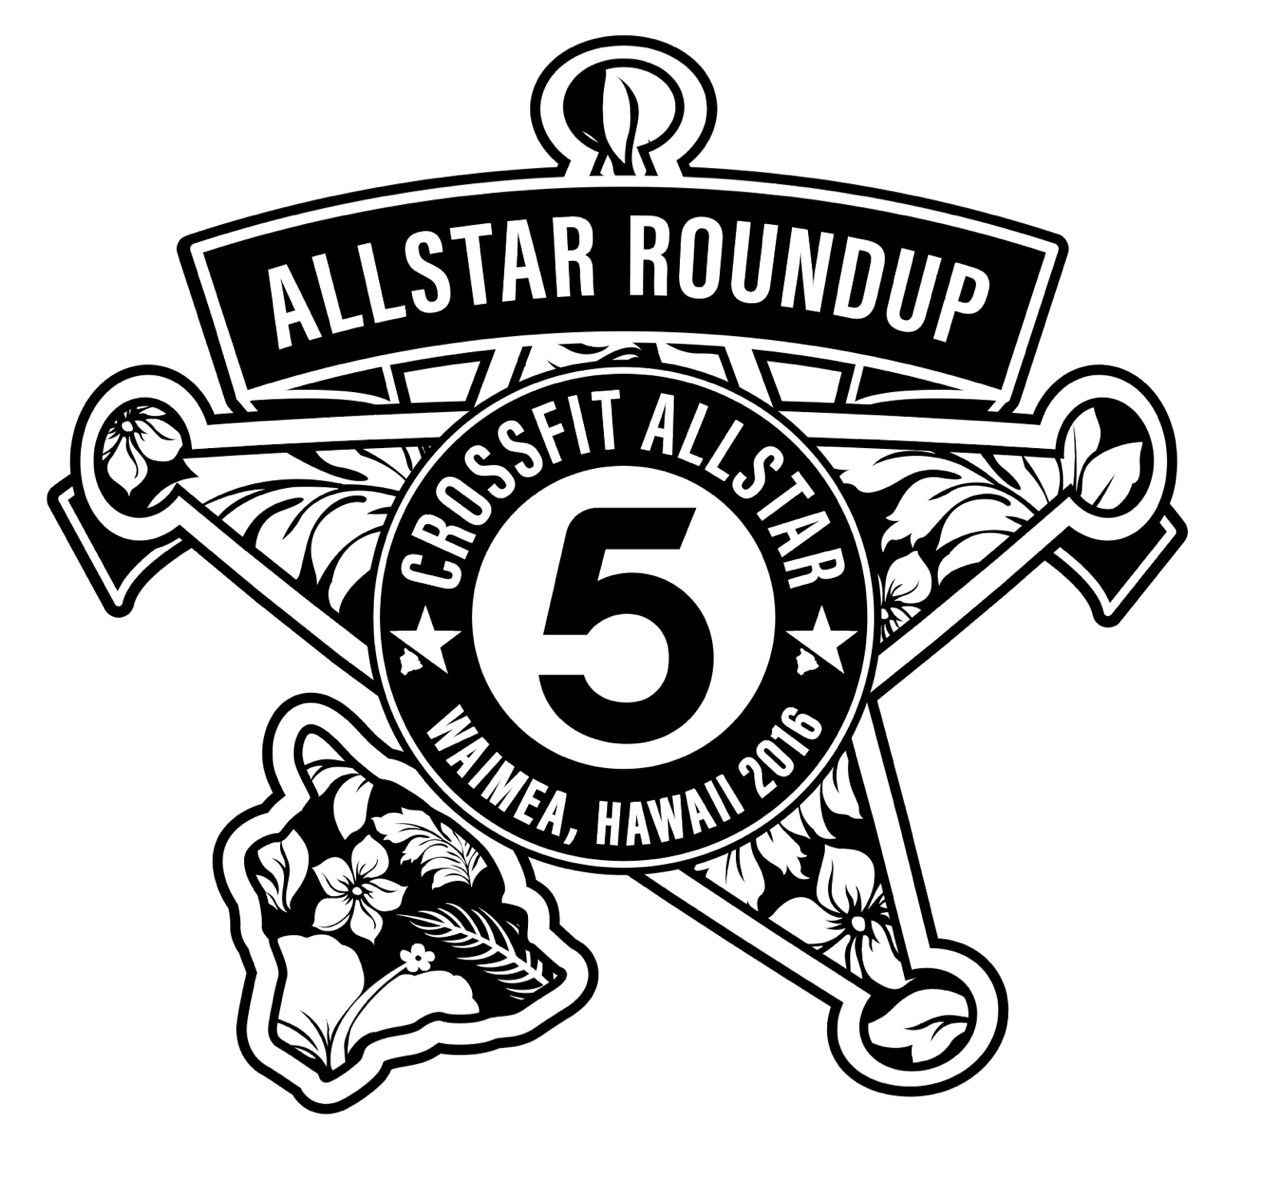 AllStar Round-Up 2016 logo